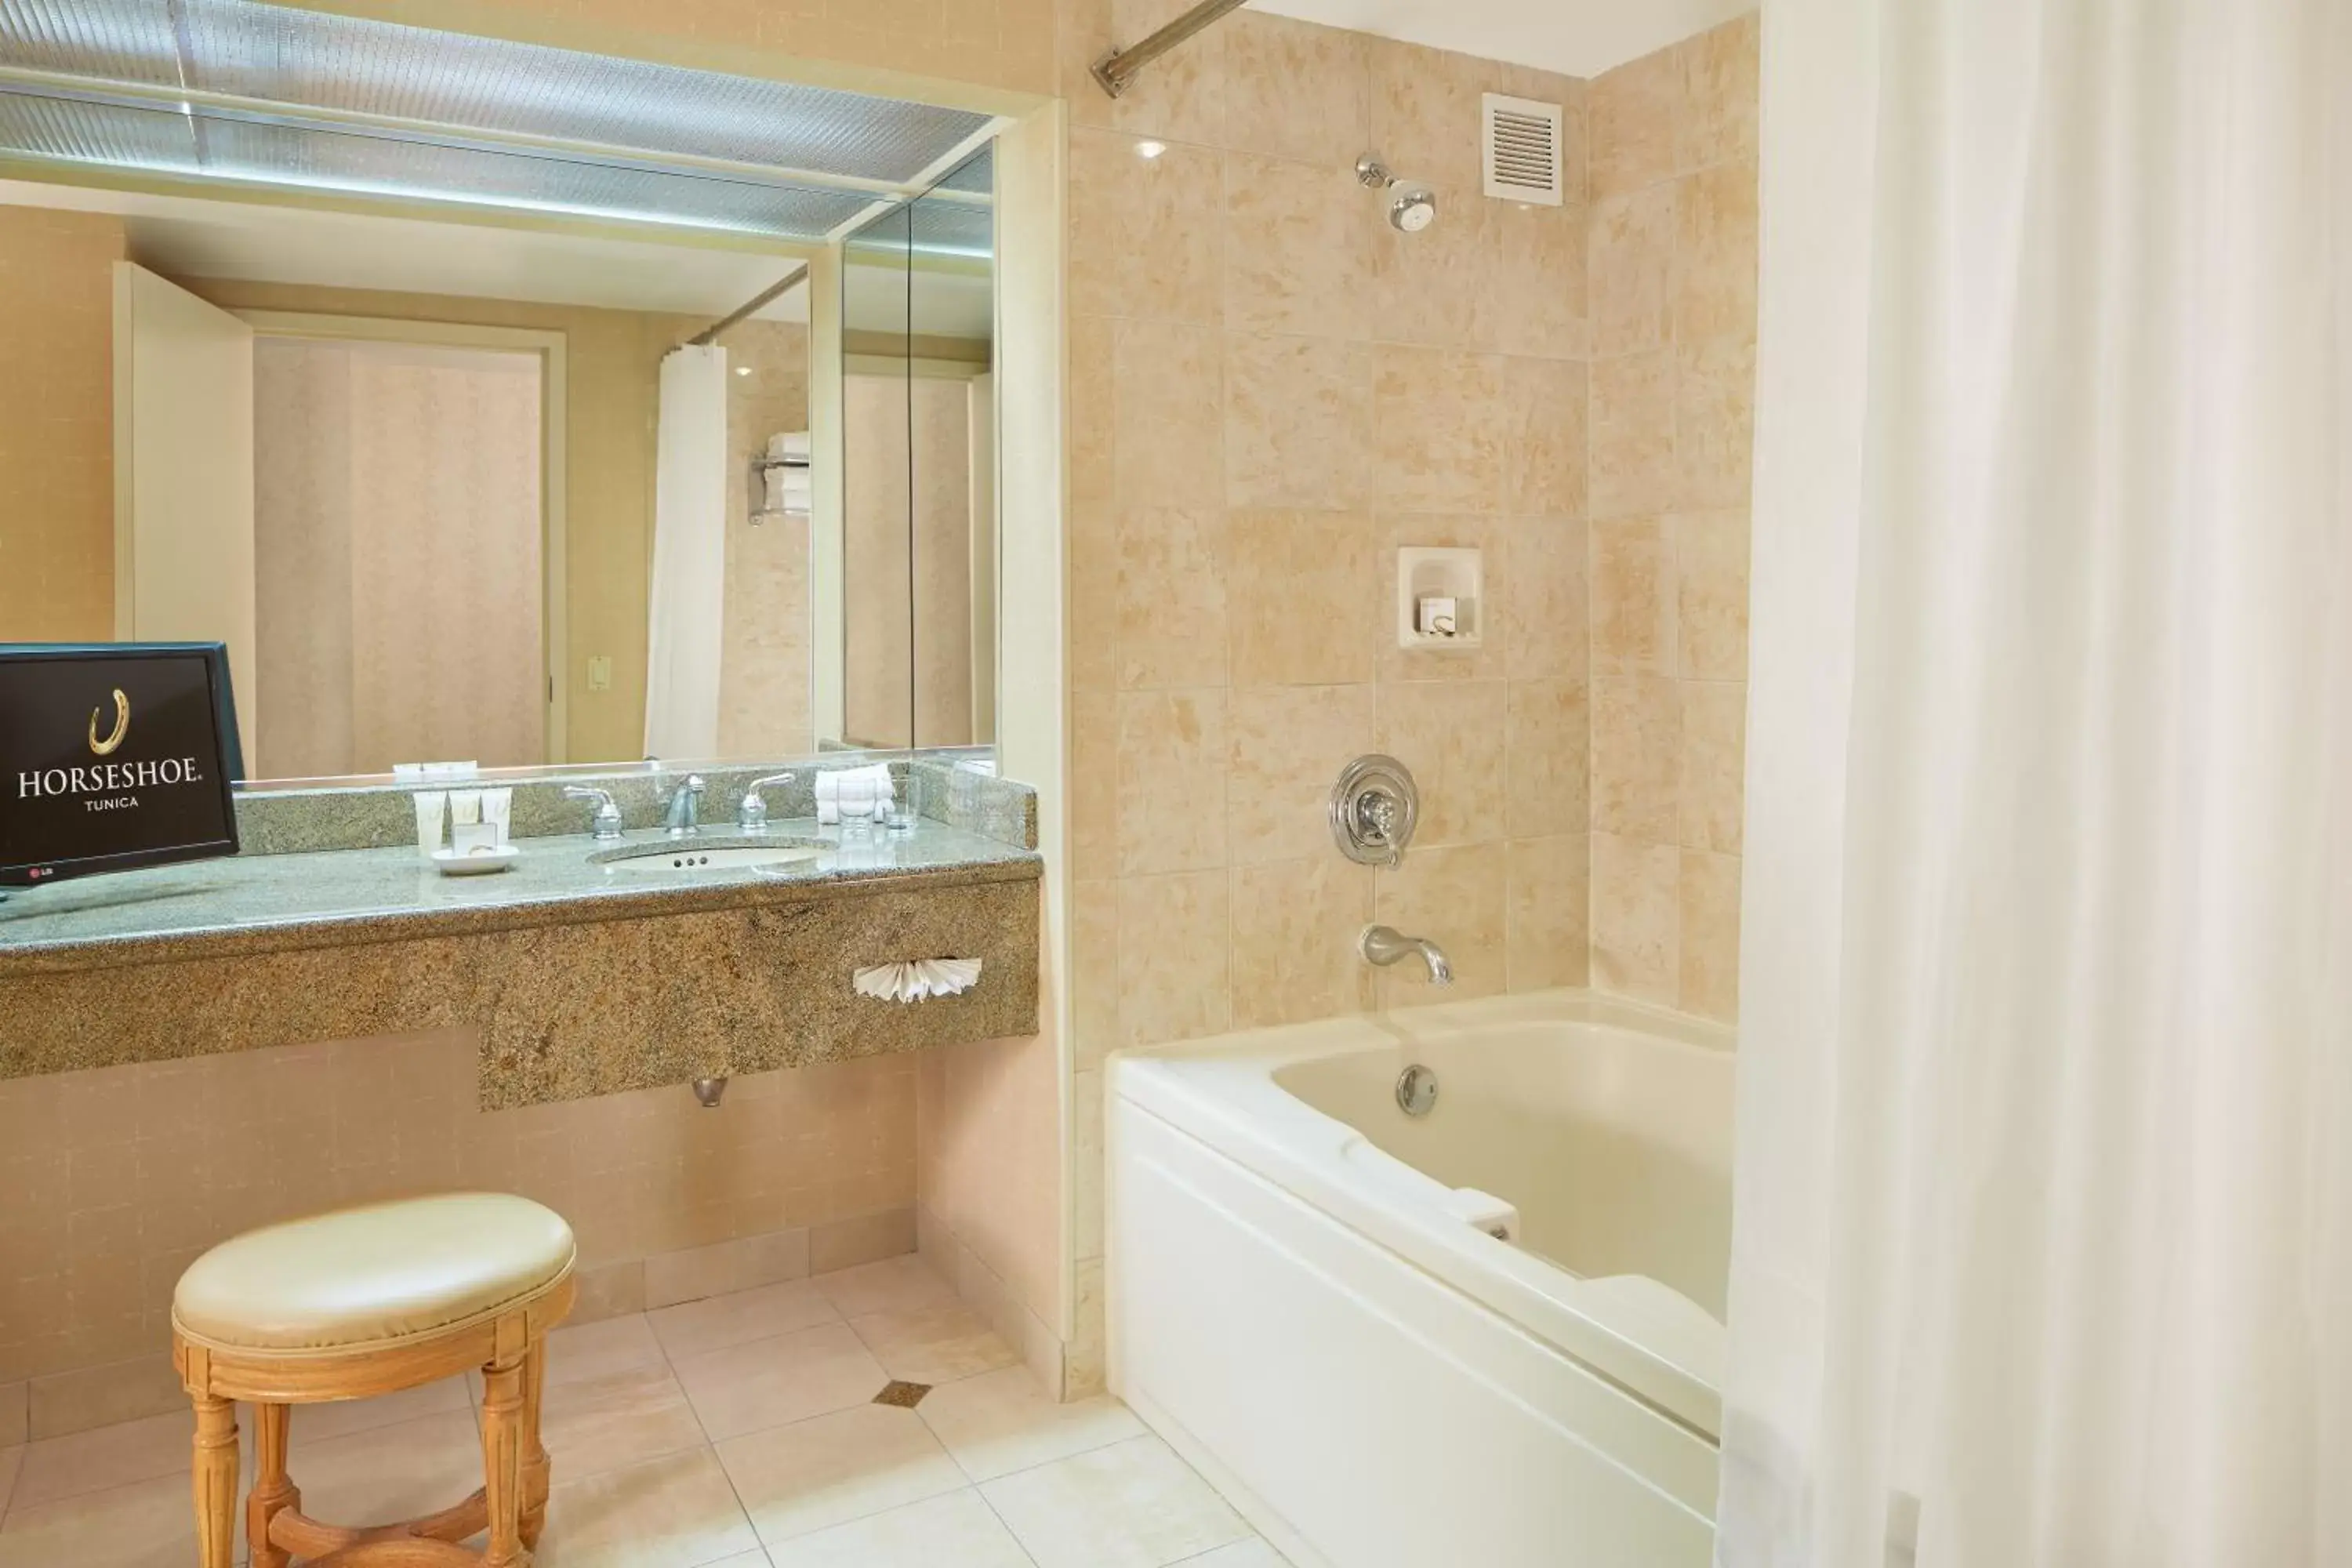 Other, Bathroom in Horseshoe Tunica Casino & Hotel